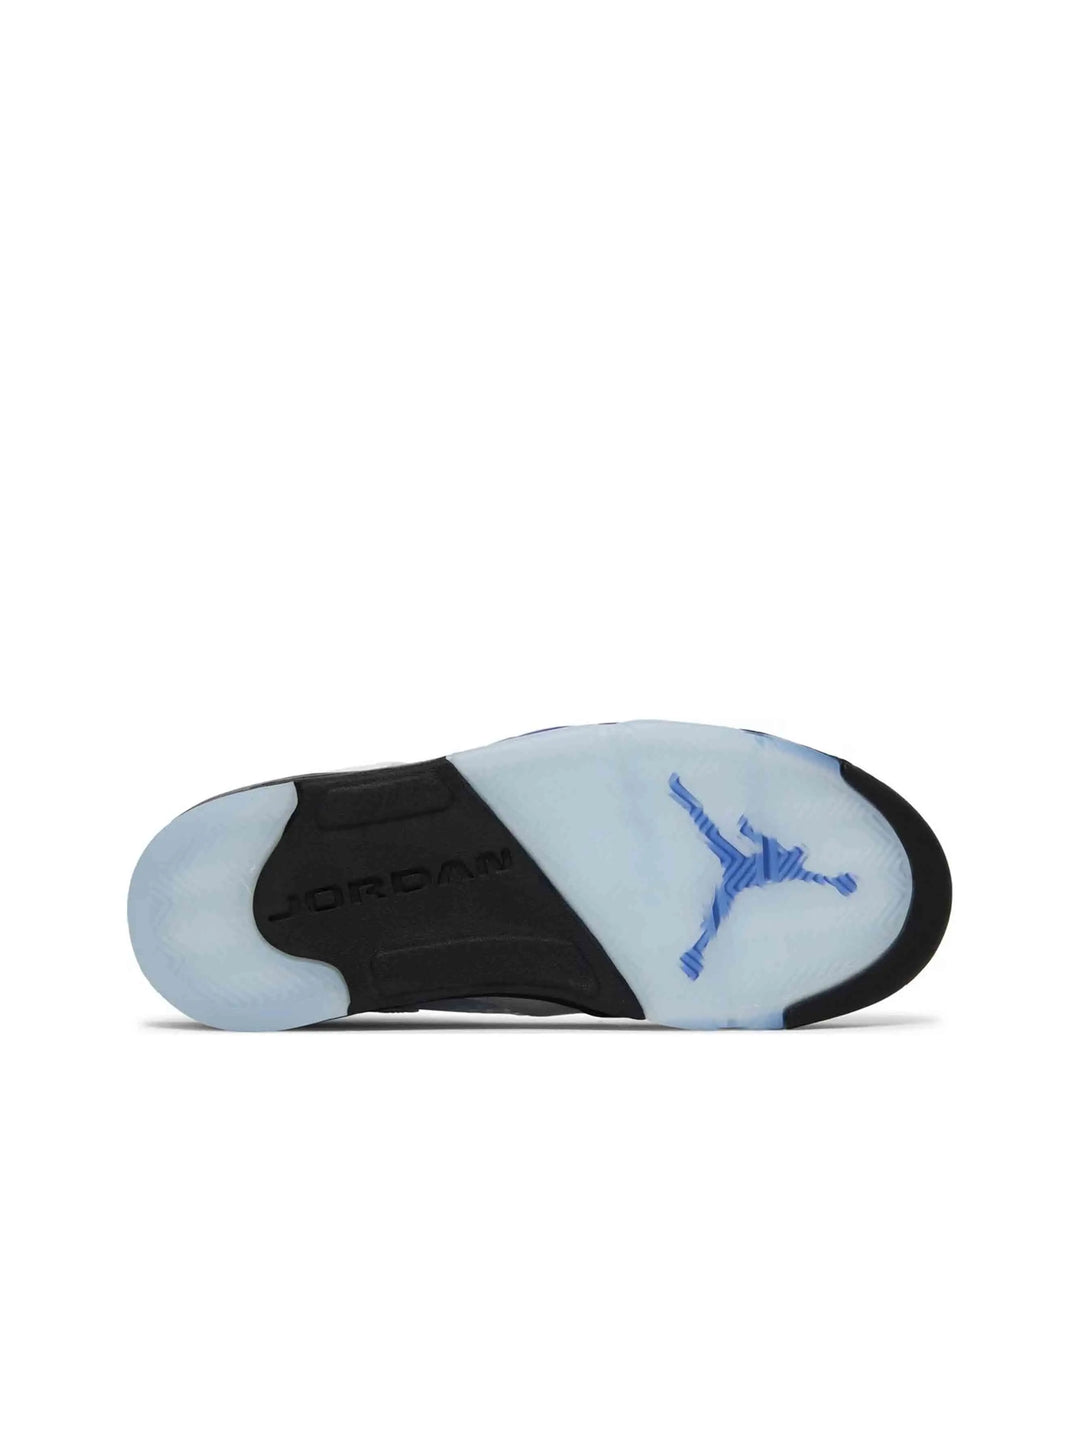 Nike Air Jordan 5 Retro Dark Concord Prior